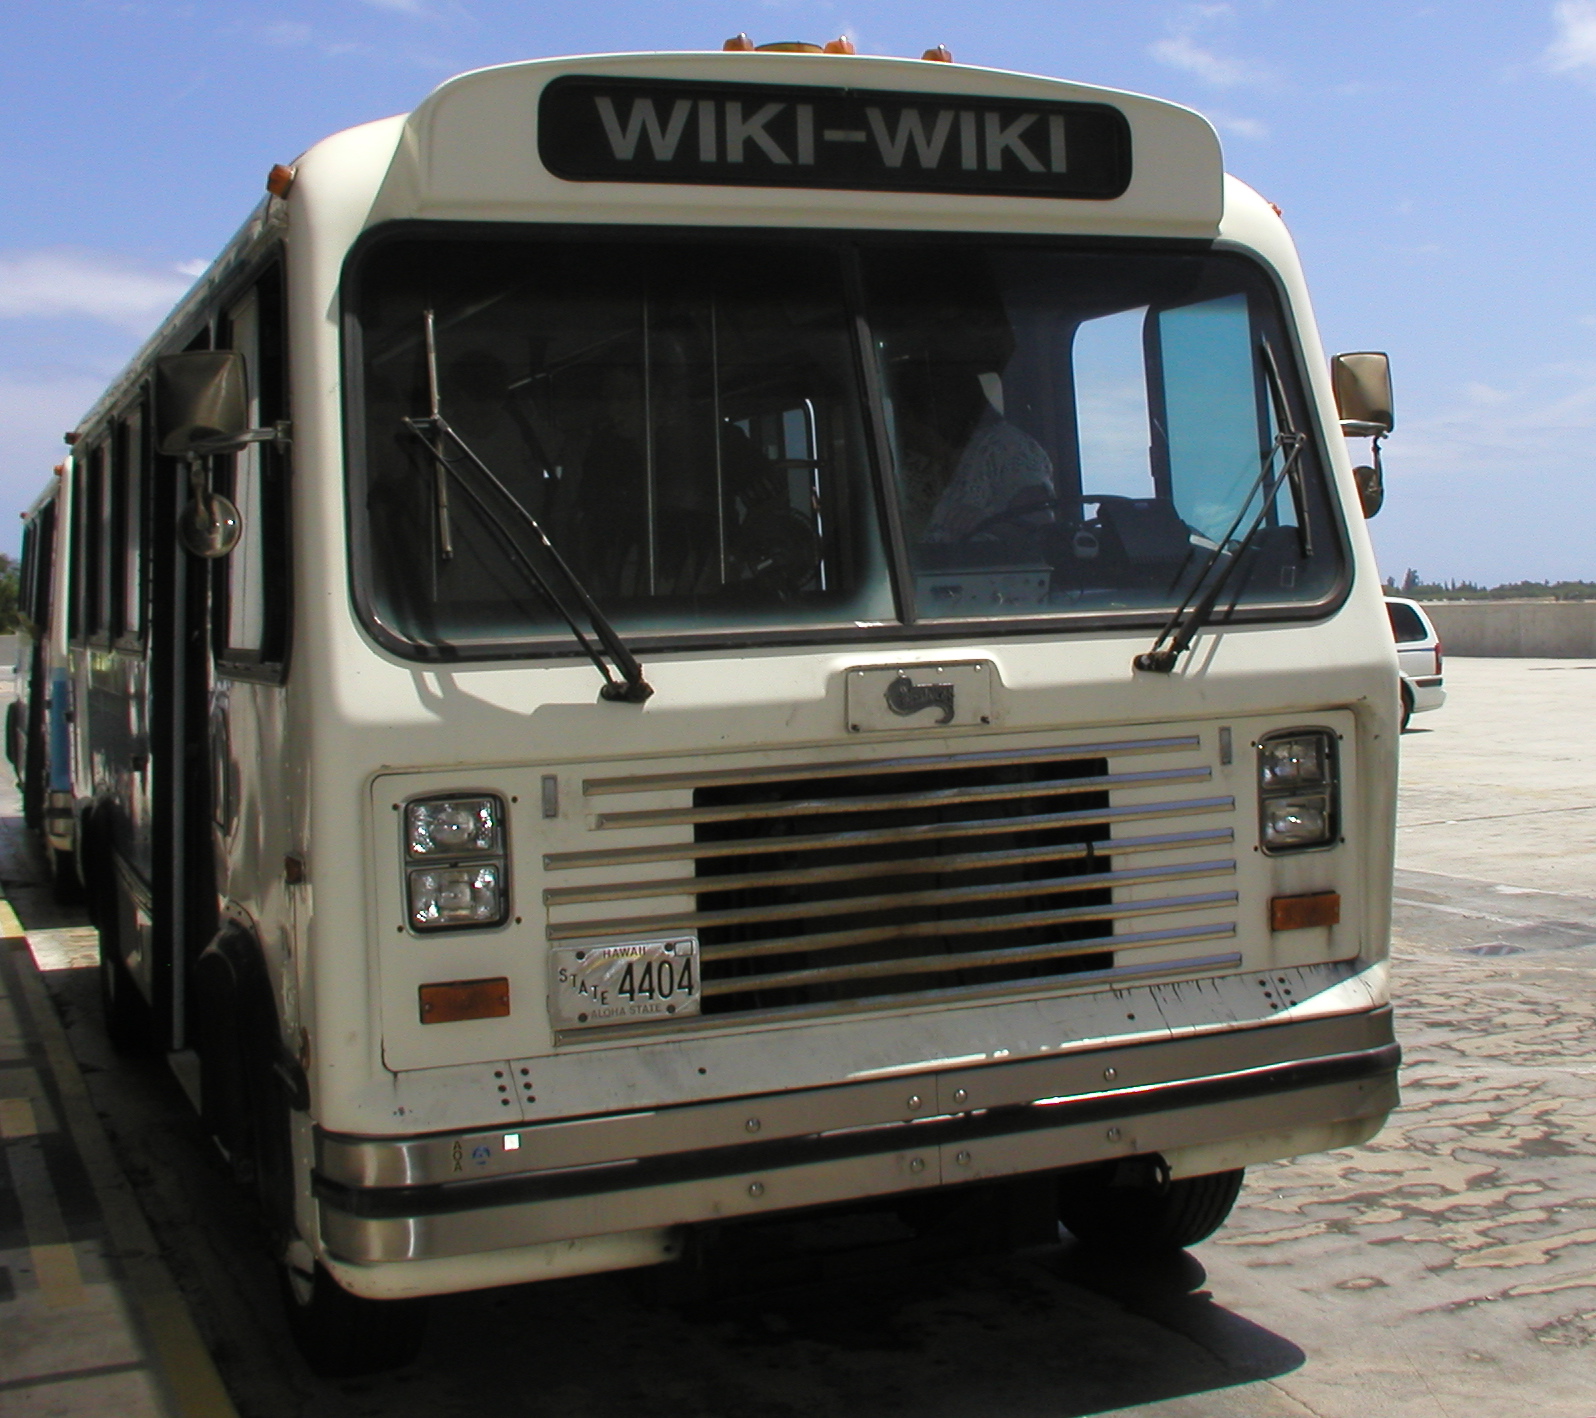 Wiki Wiki bus (cogdog)